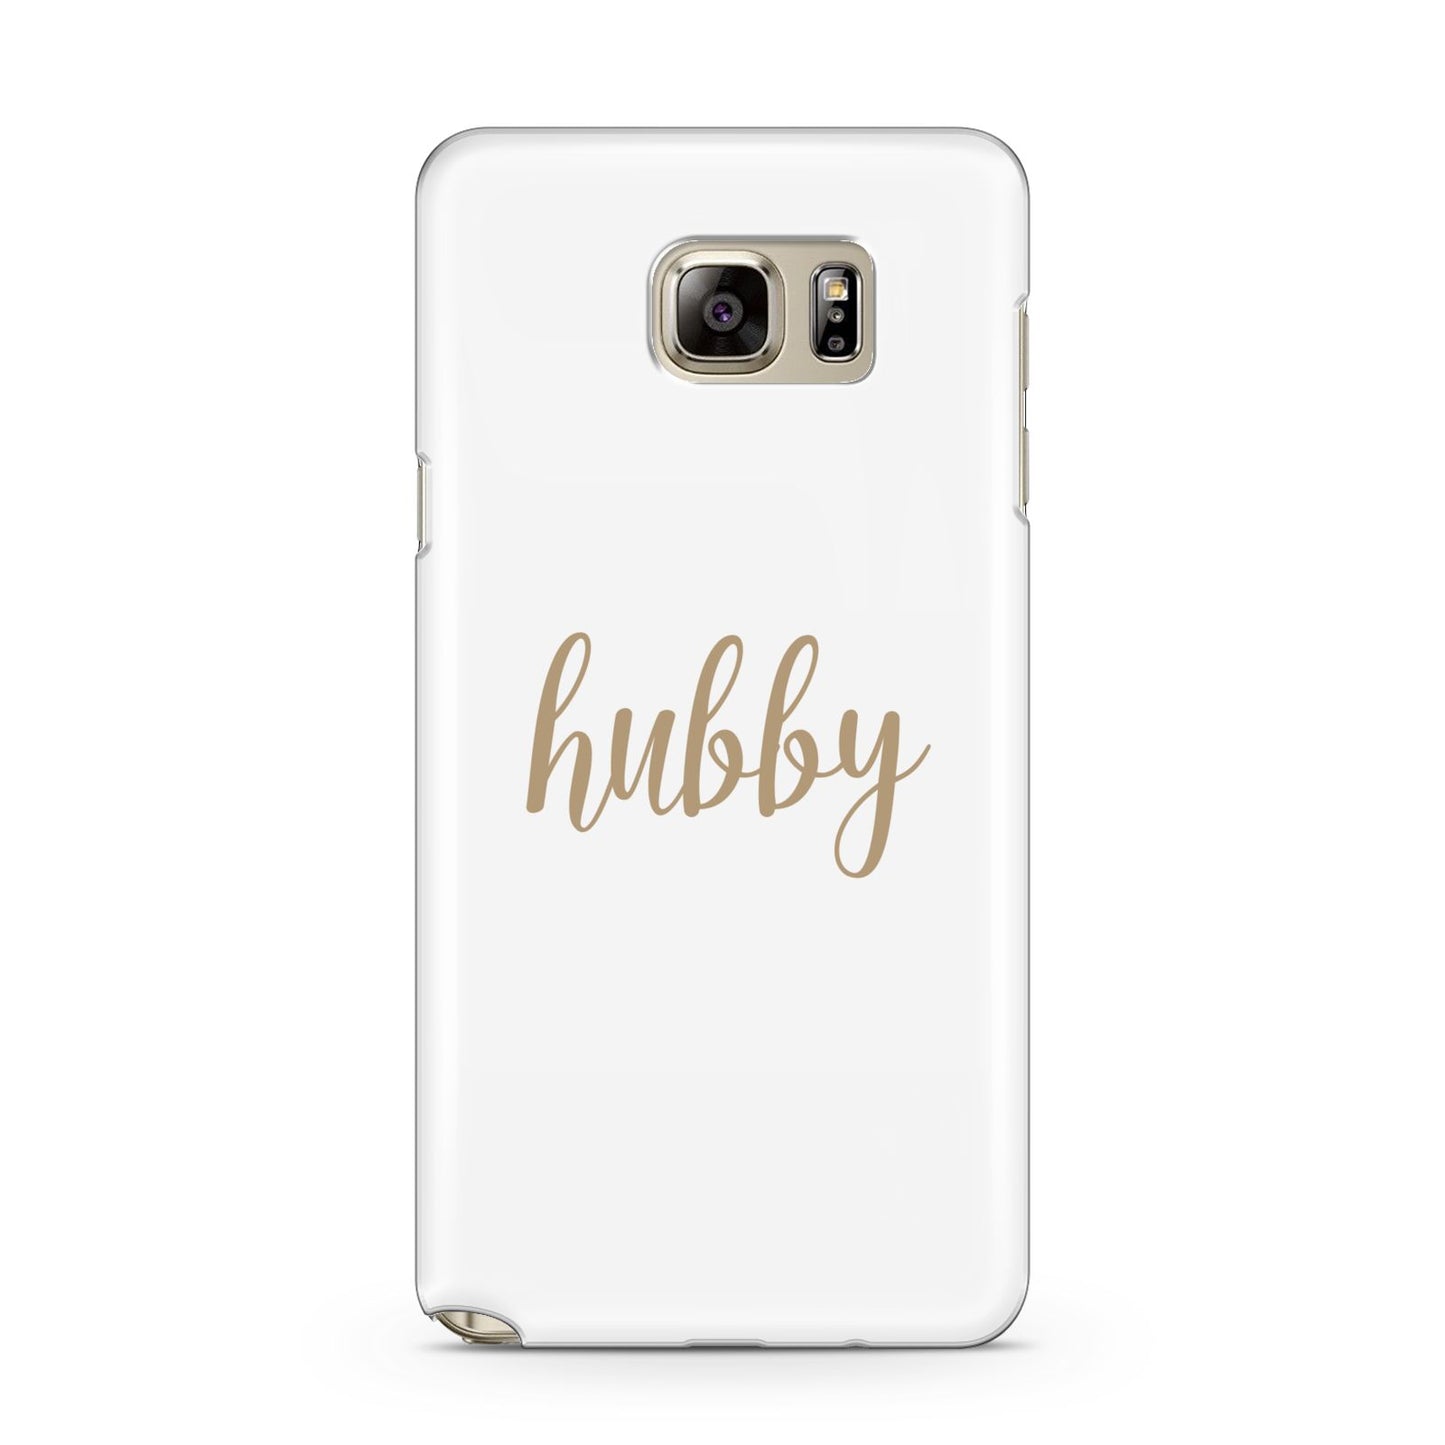 Hubby Samsung Galaxy Note 5 Case